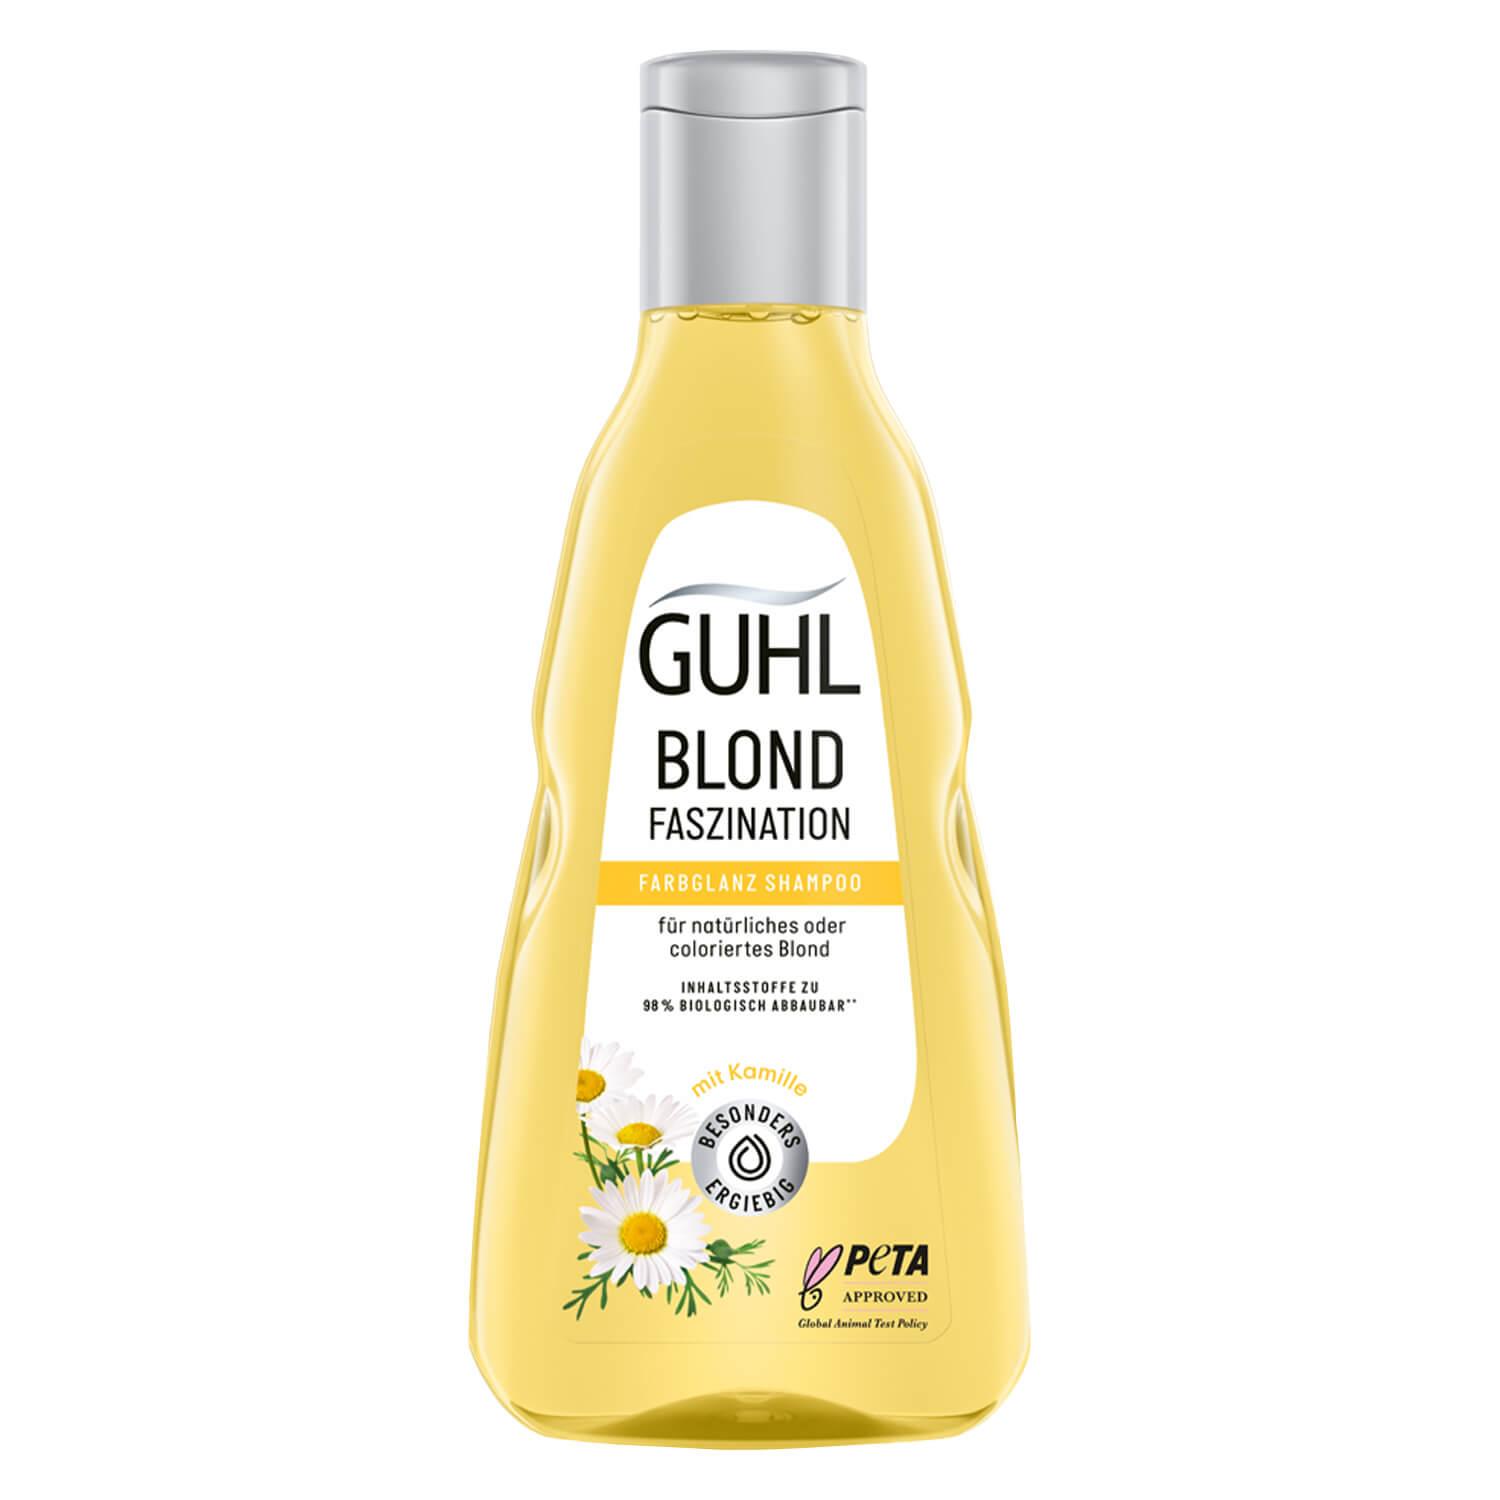 GUHL - BLOND FASCINATION Shampoo